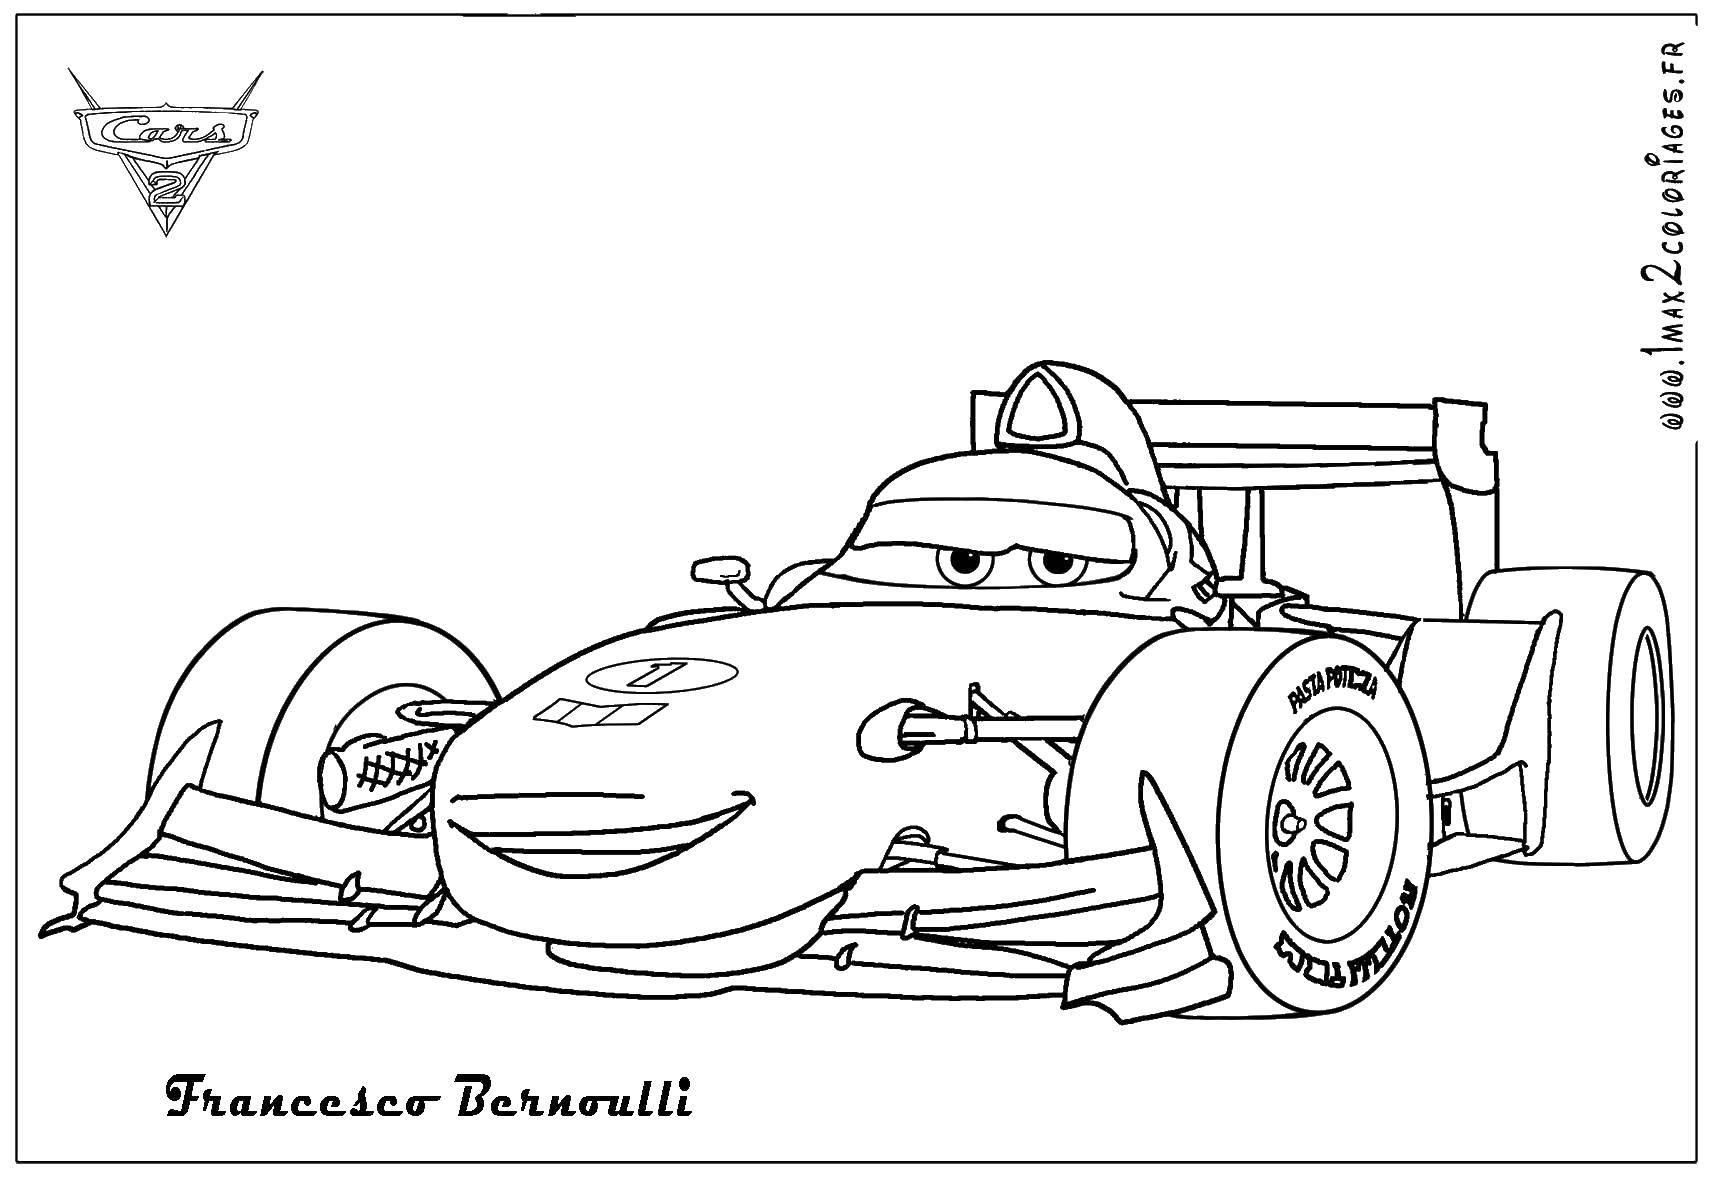 Coloring Francesco from cars. Category Wheelbarrows. Tags:  Francesco , Bernoulli, cars.